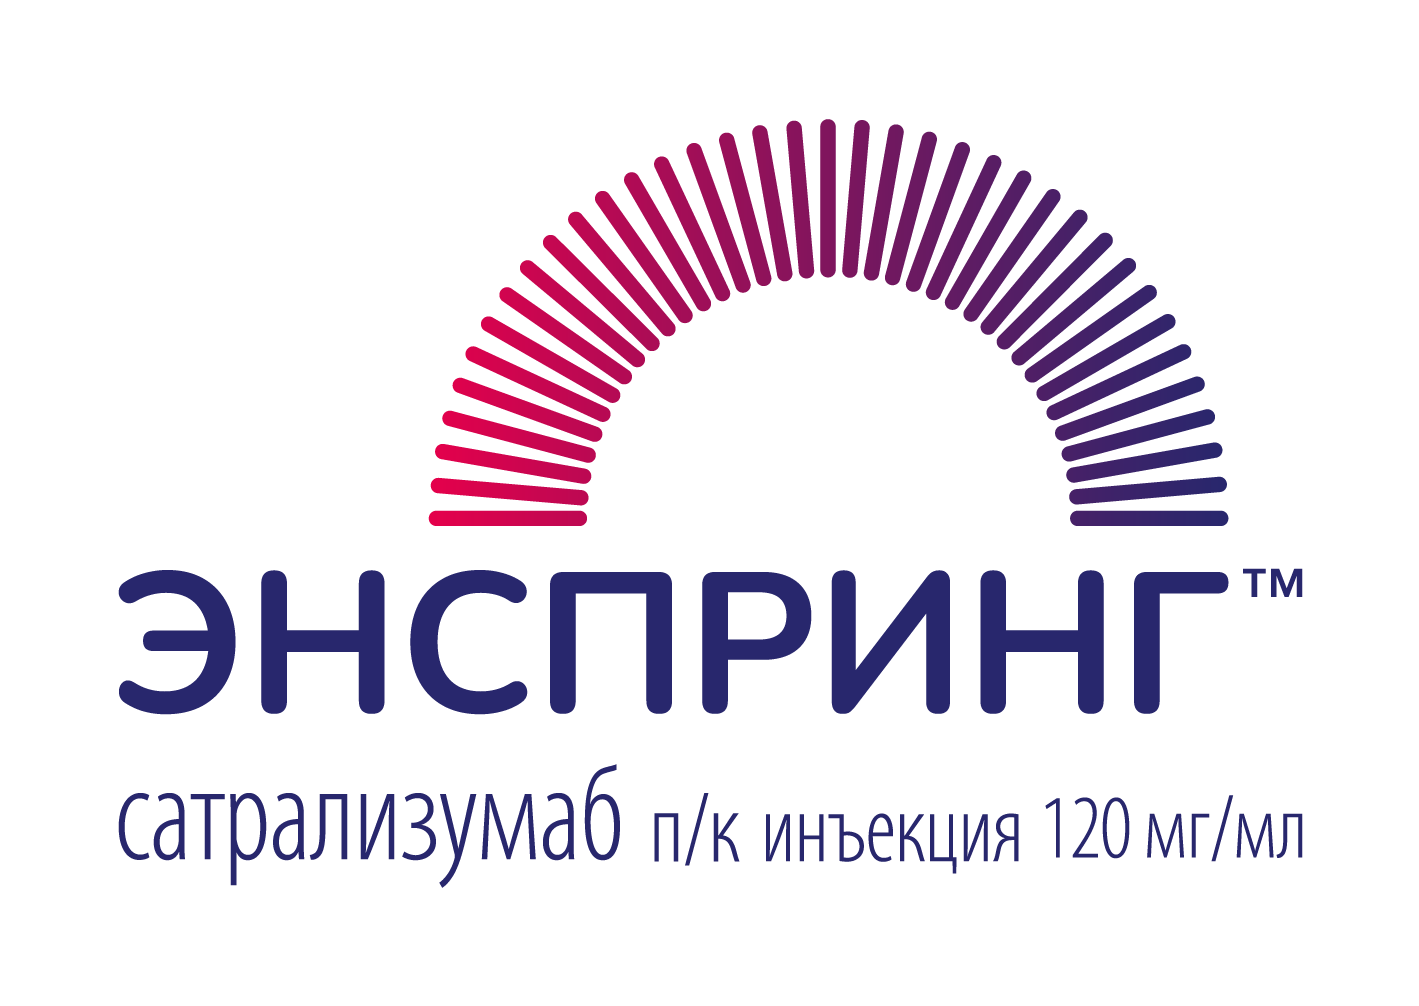 Enspryng / Энспринг (сатрализумаб) — русский логотип